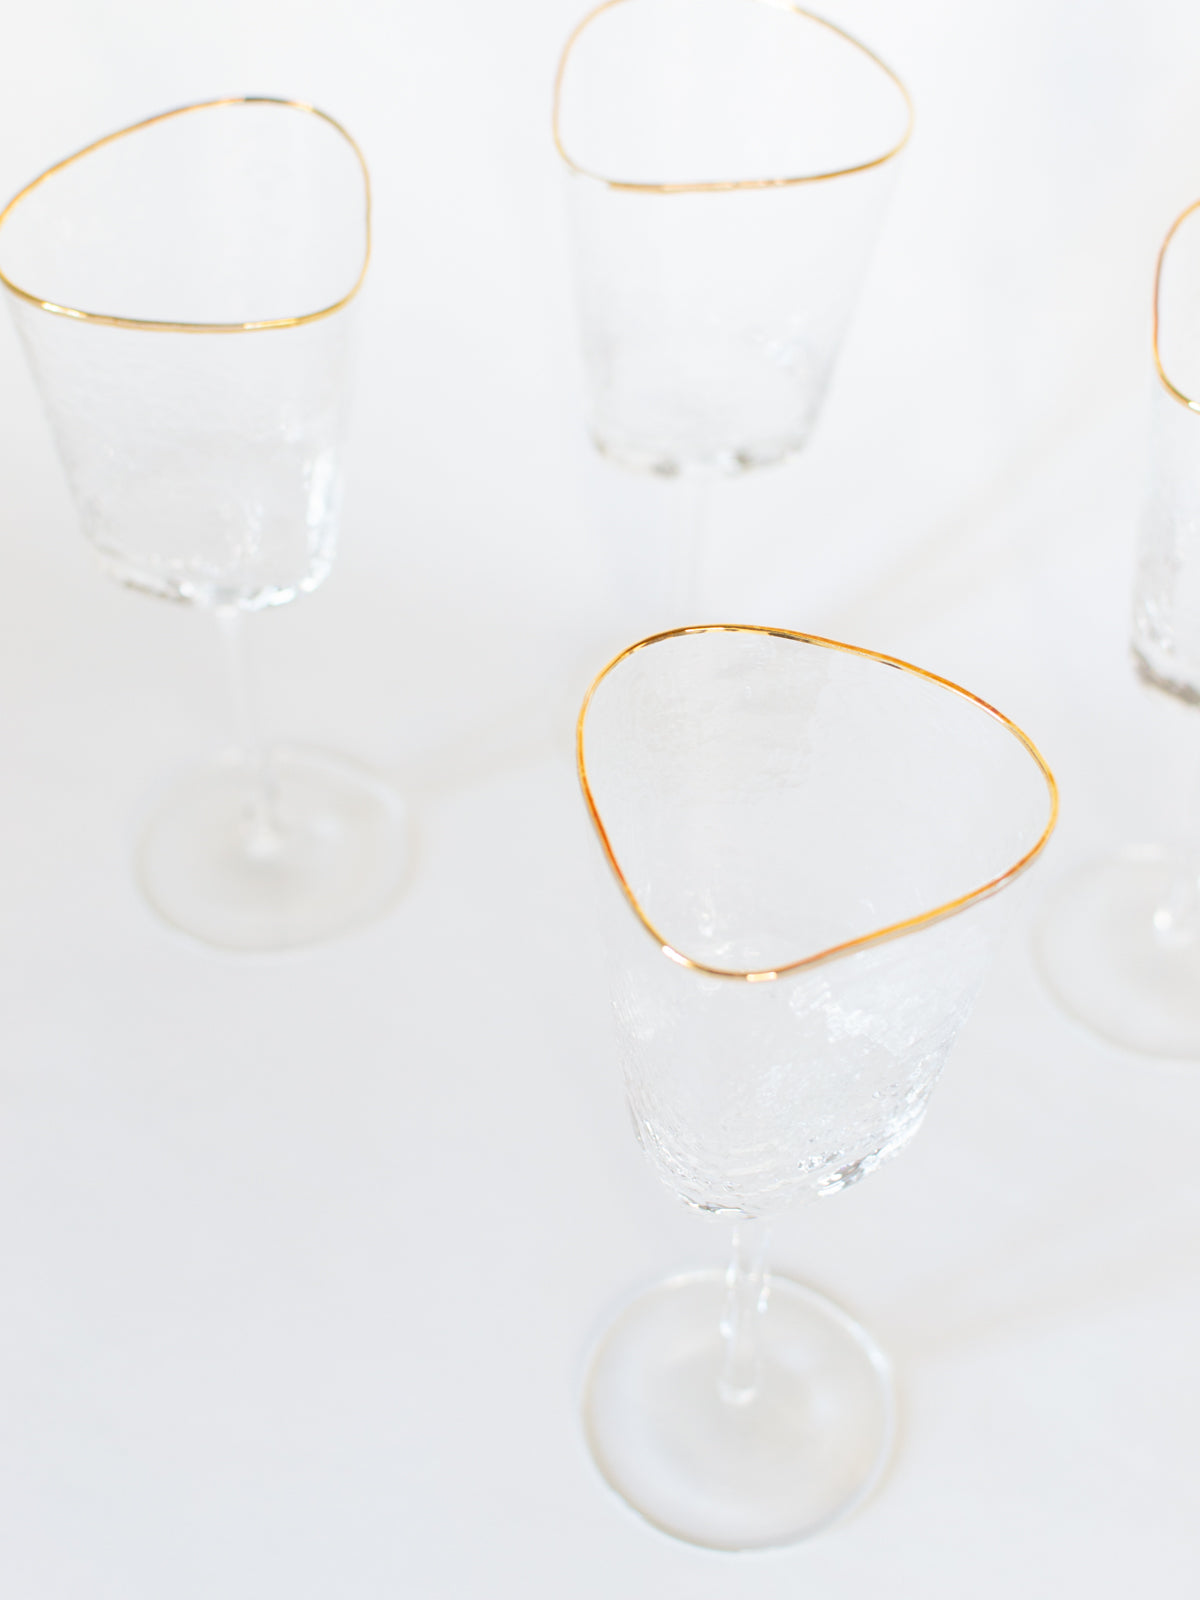 Triangular Gold Rimmed Wine Glass, Set of 4